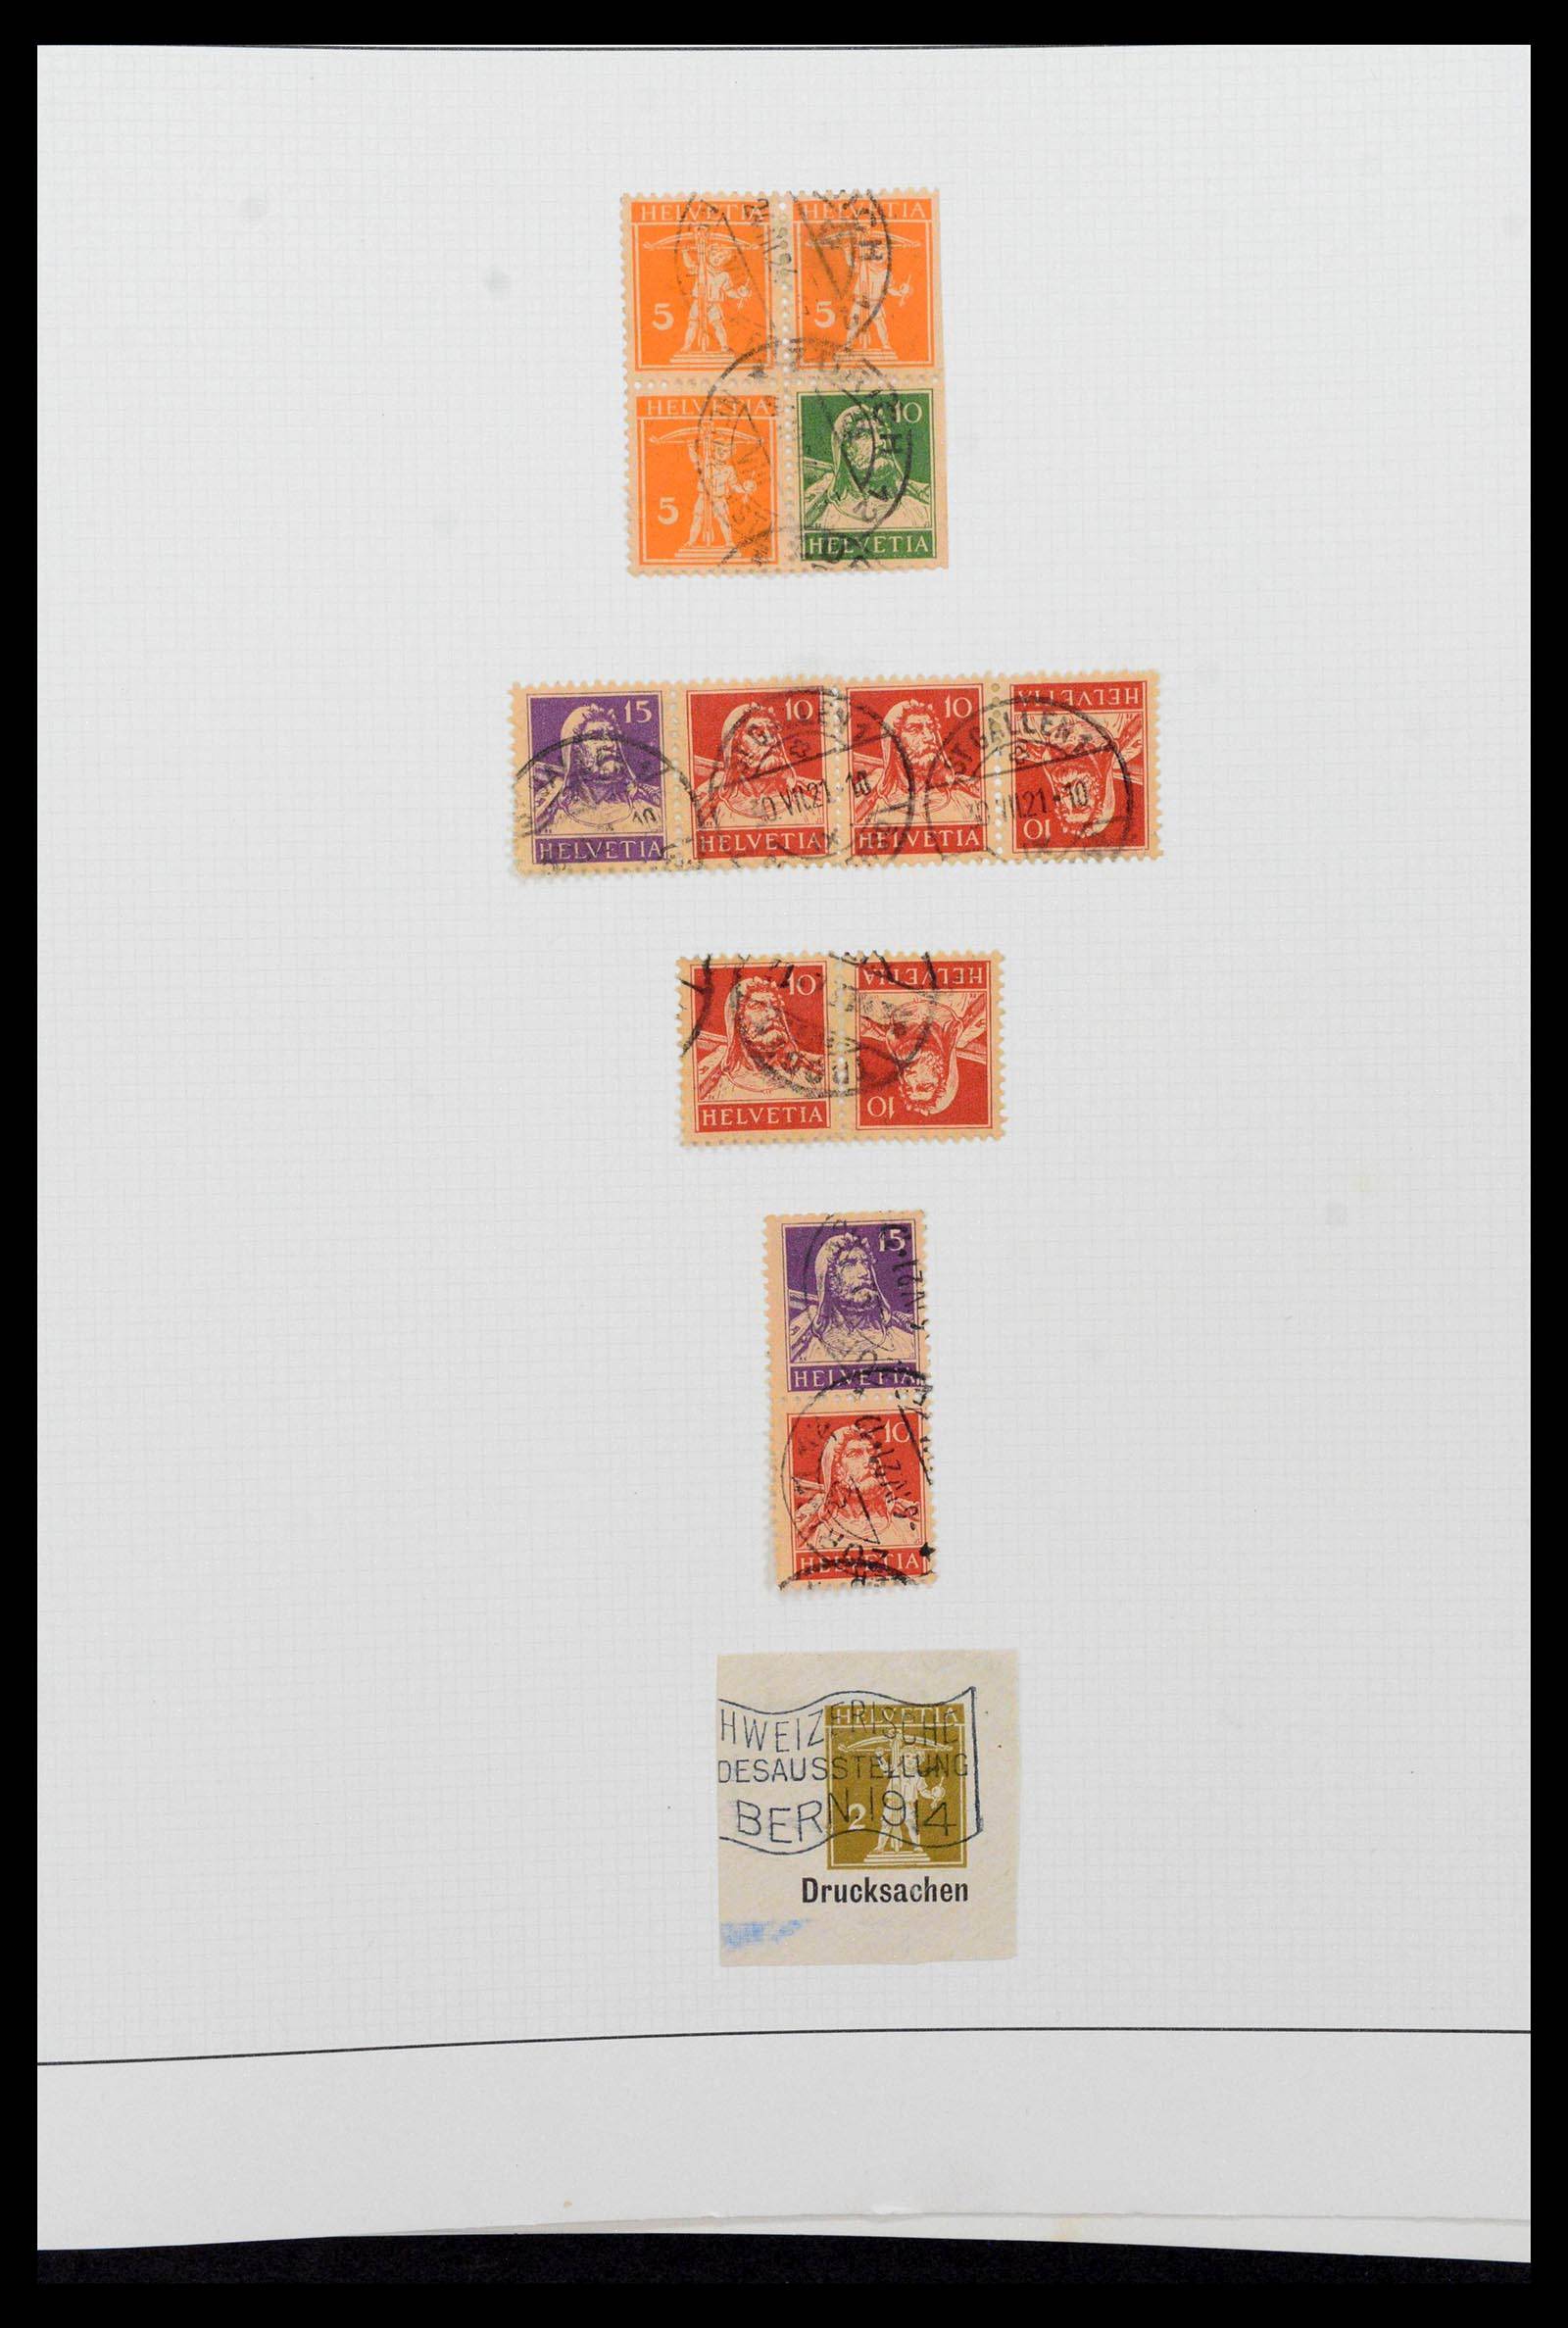 39235 0006 - Stamp collection 39235 Switzerland 1843-1960.